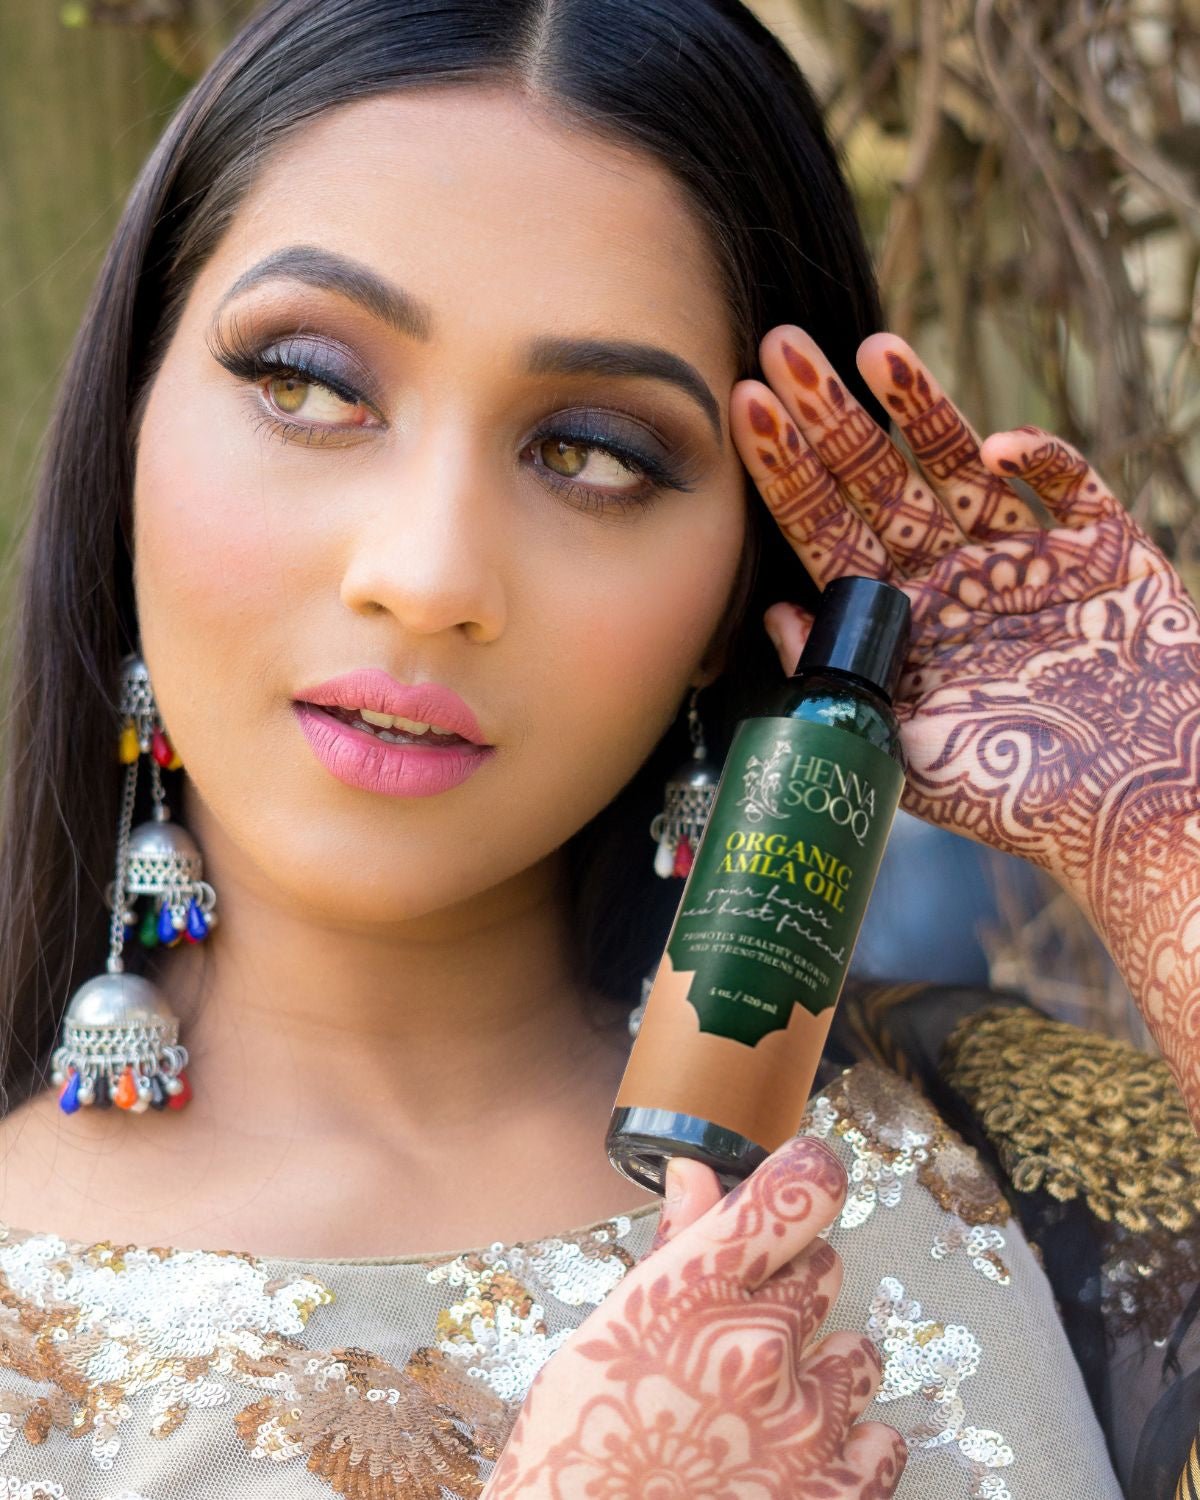 Organic Amla Oil for Hair - Henna Sooq